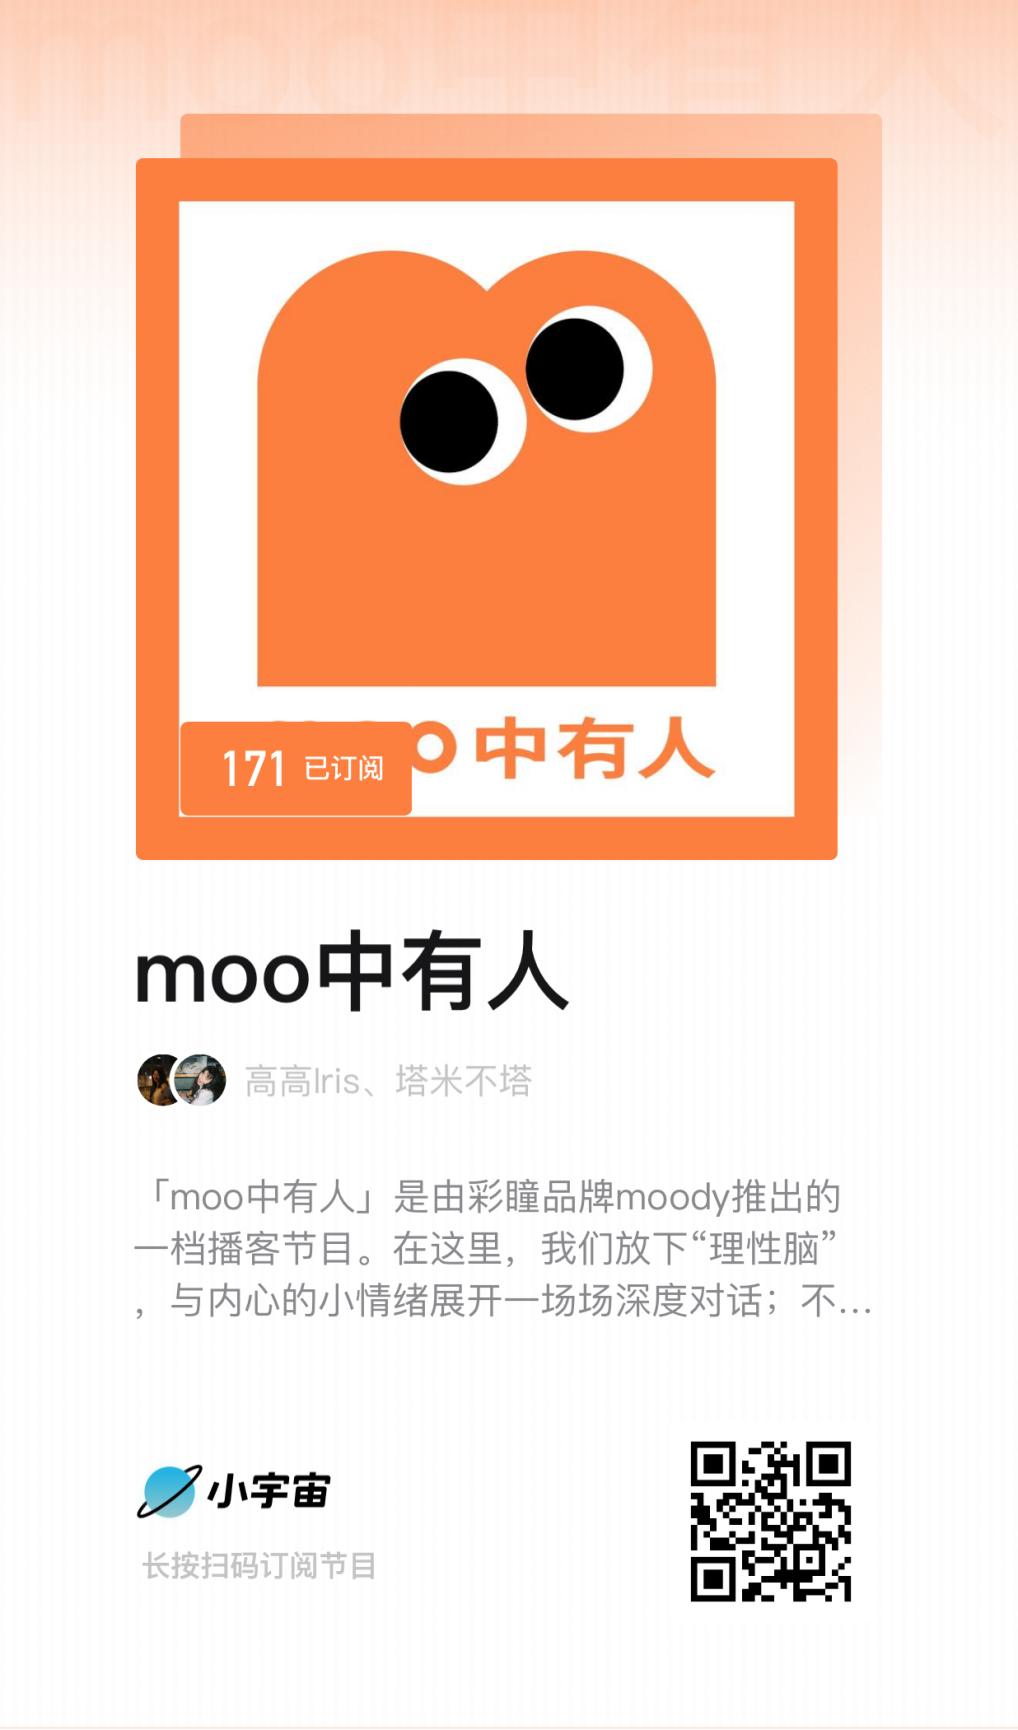 moody 上线品牌播客「moo  中有人」